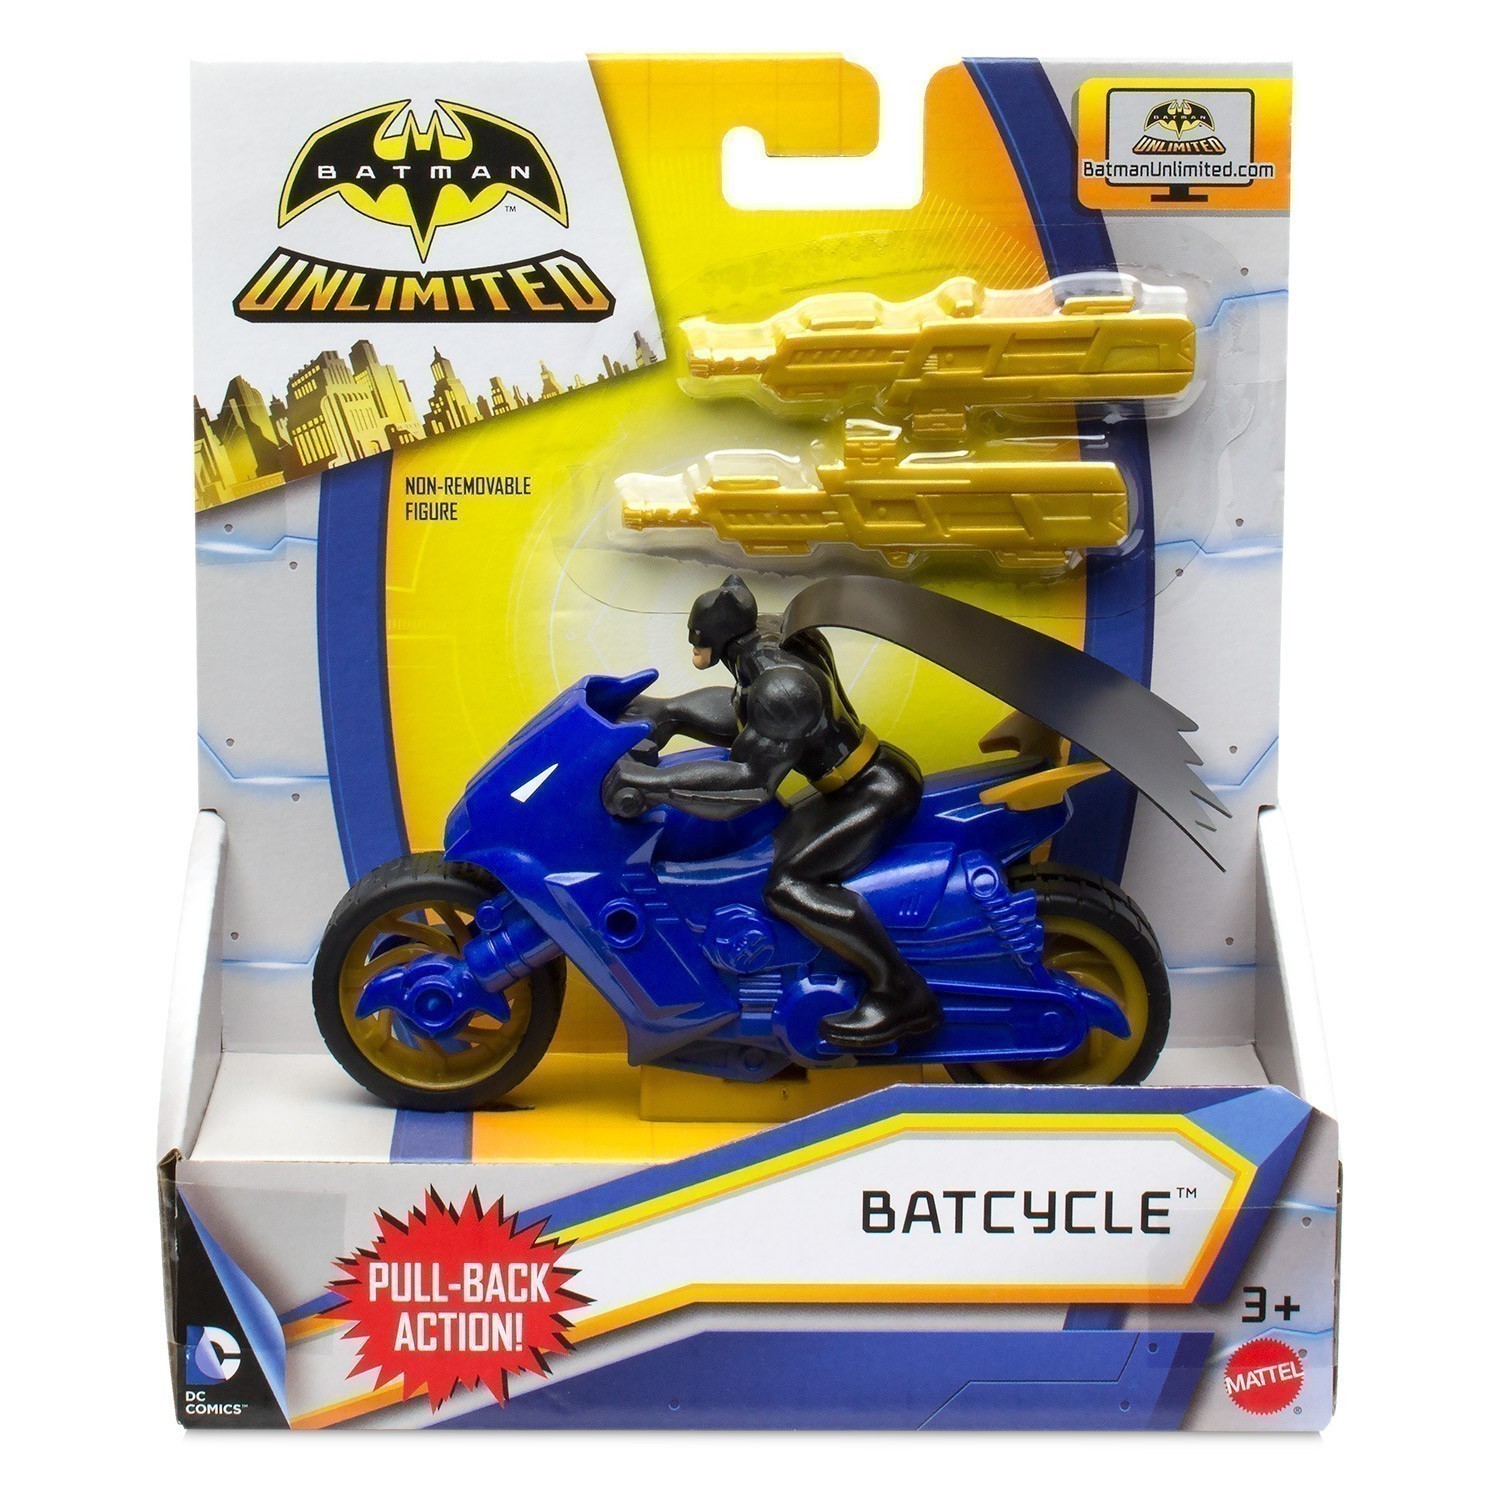 Batman Unlimited - Batcycle